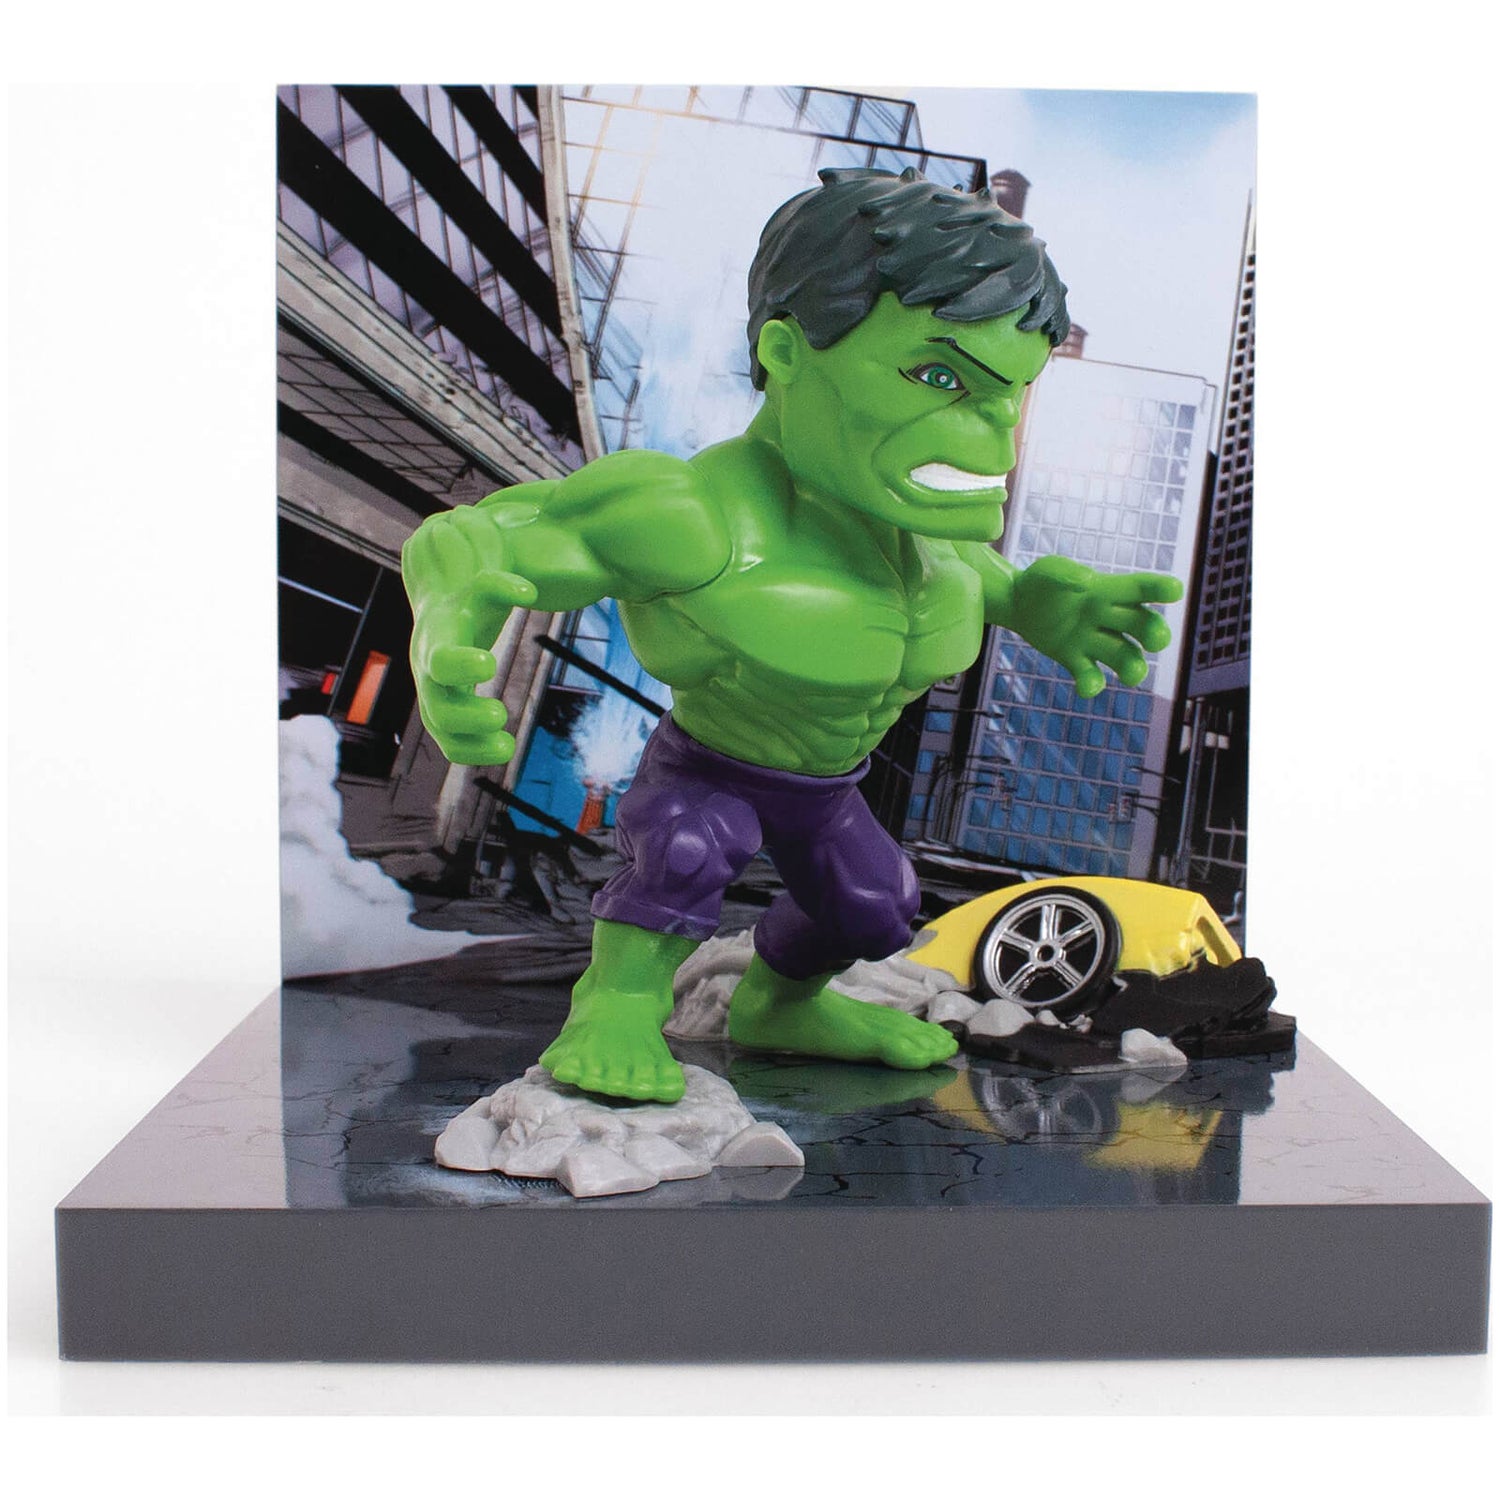 The Loyal Subjects Superama Marvel Comics Figural Diorama - Hulk